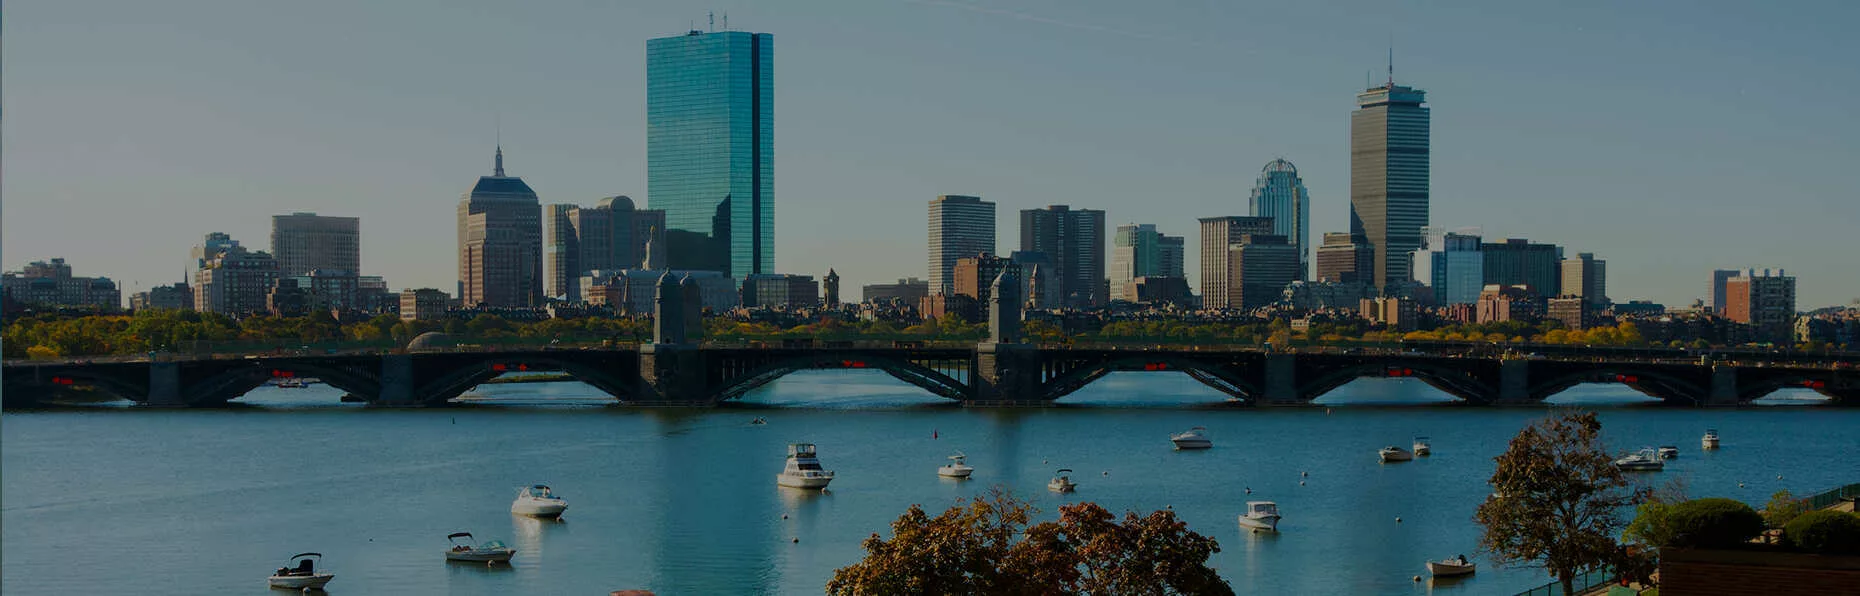 hire dedicated developers boston